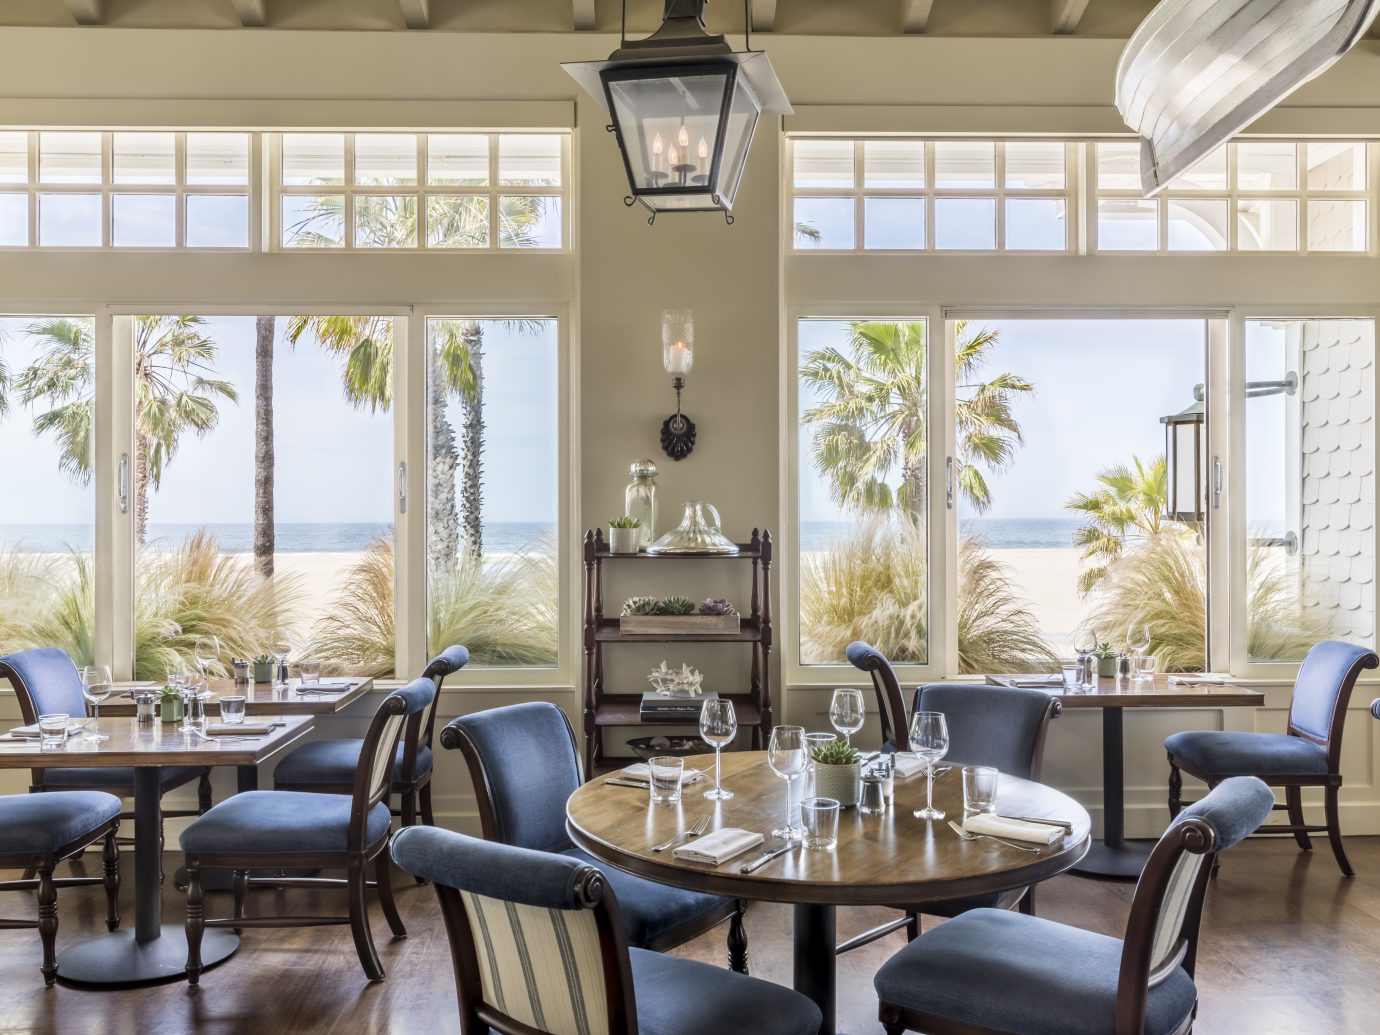 Restaurant at Shutters on the Beach, Santa Monica, CA